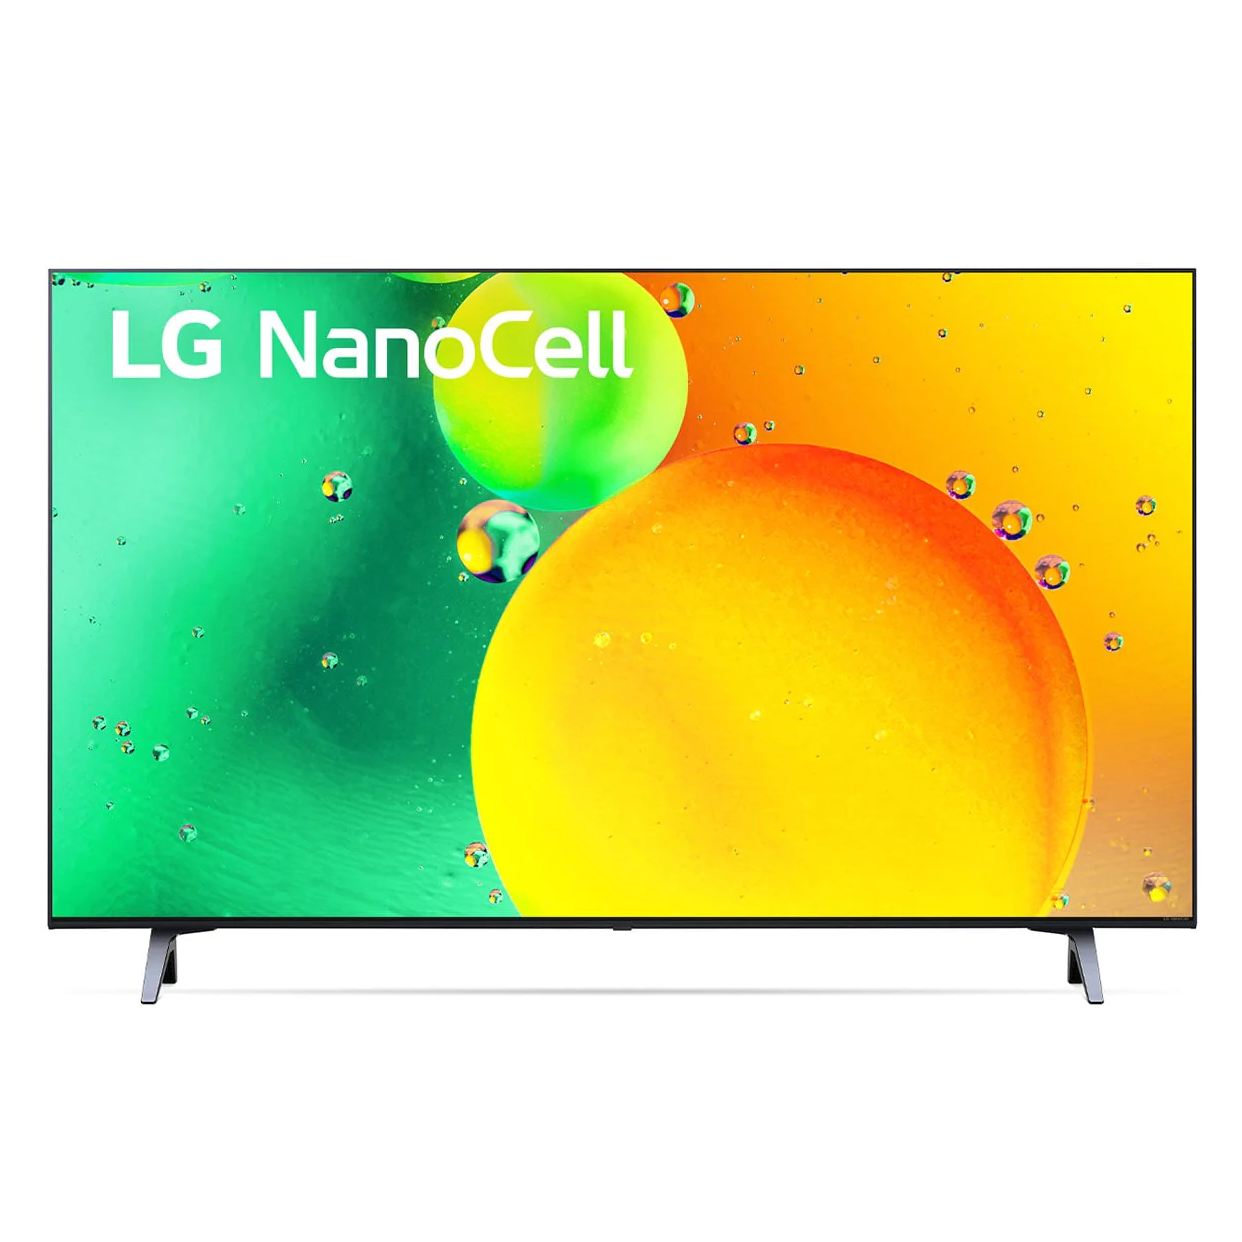 Pantalla Smart TV LG NANOCELL 55 4K UHD